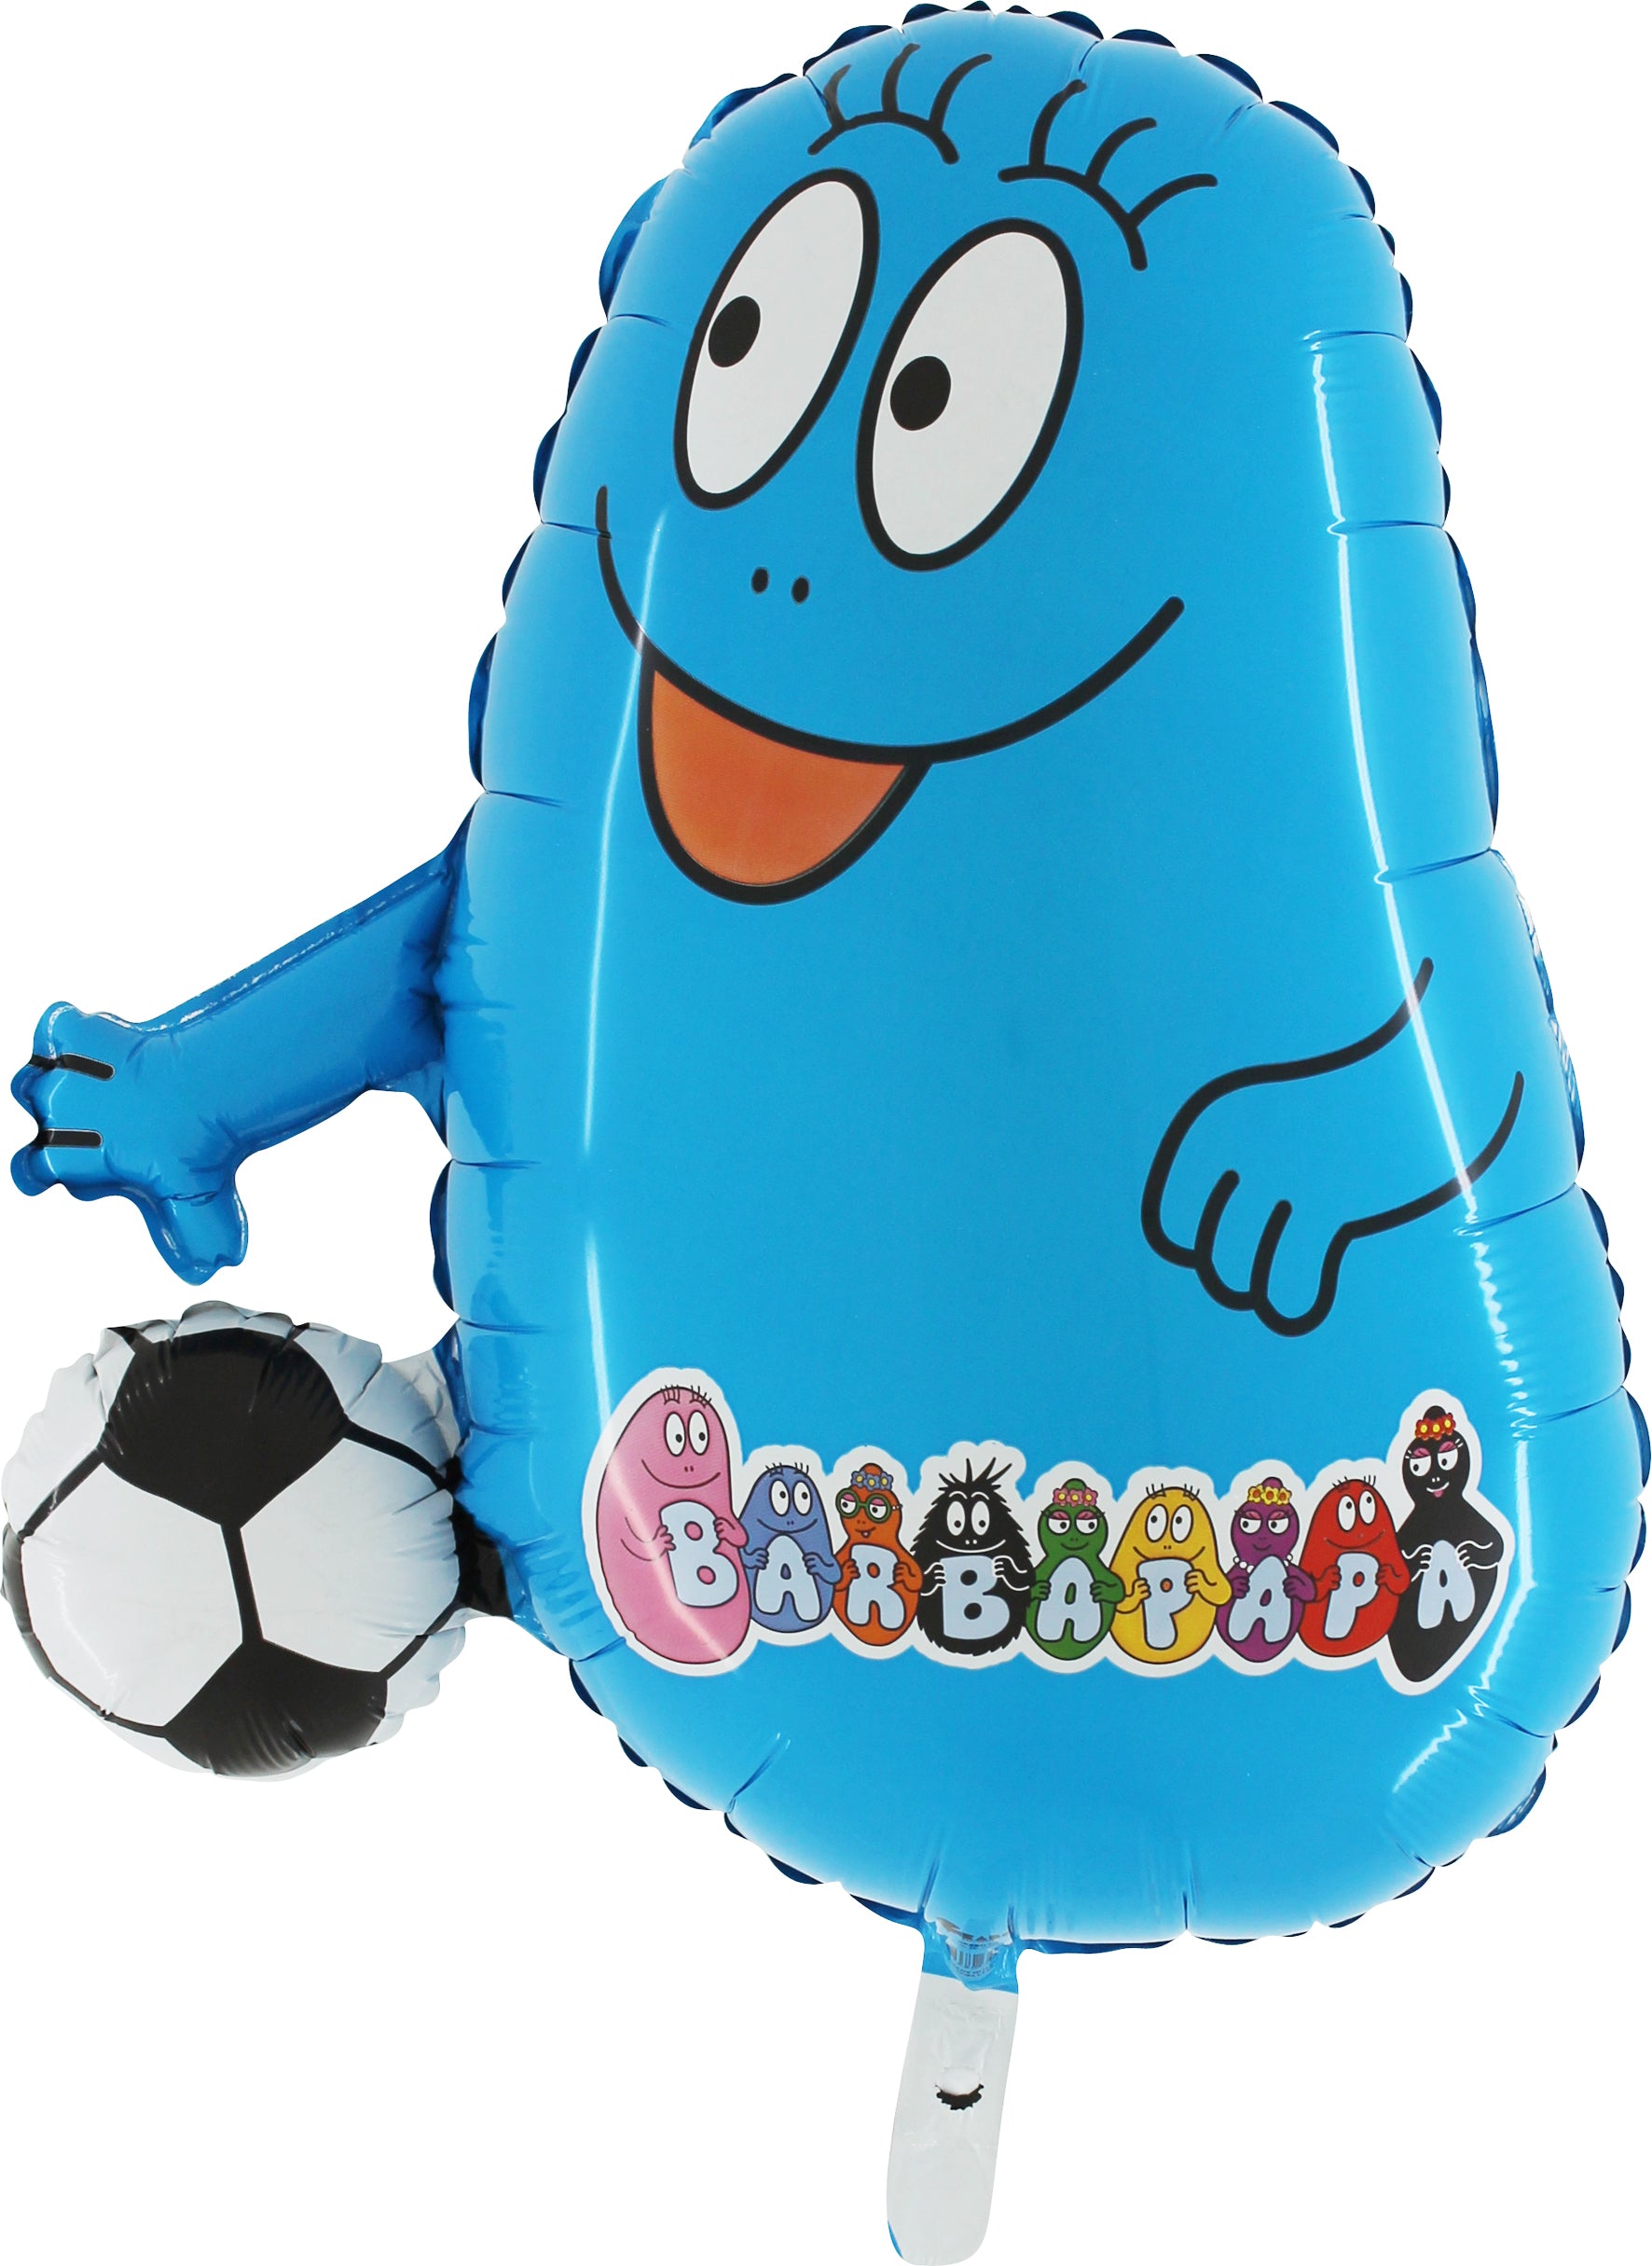 blue barbapapa shaped balloon with soccer ball